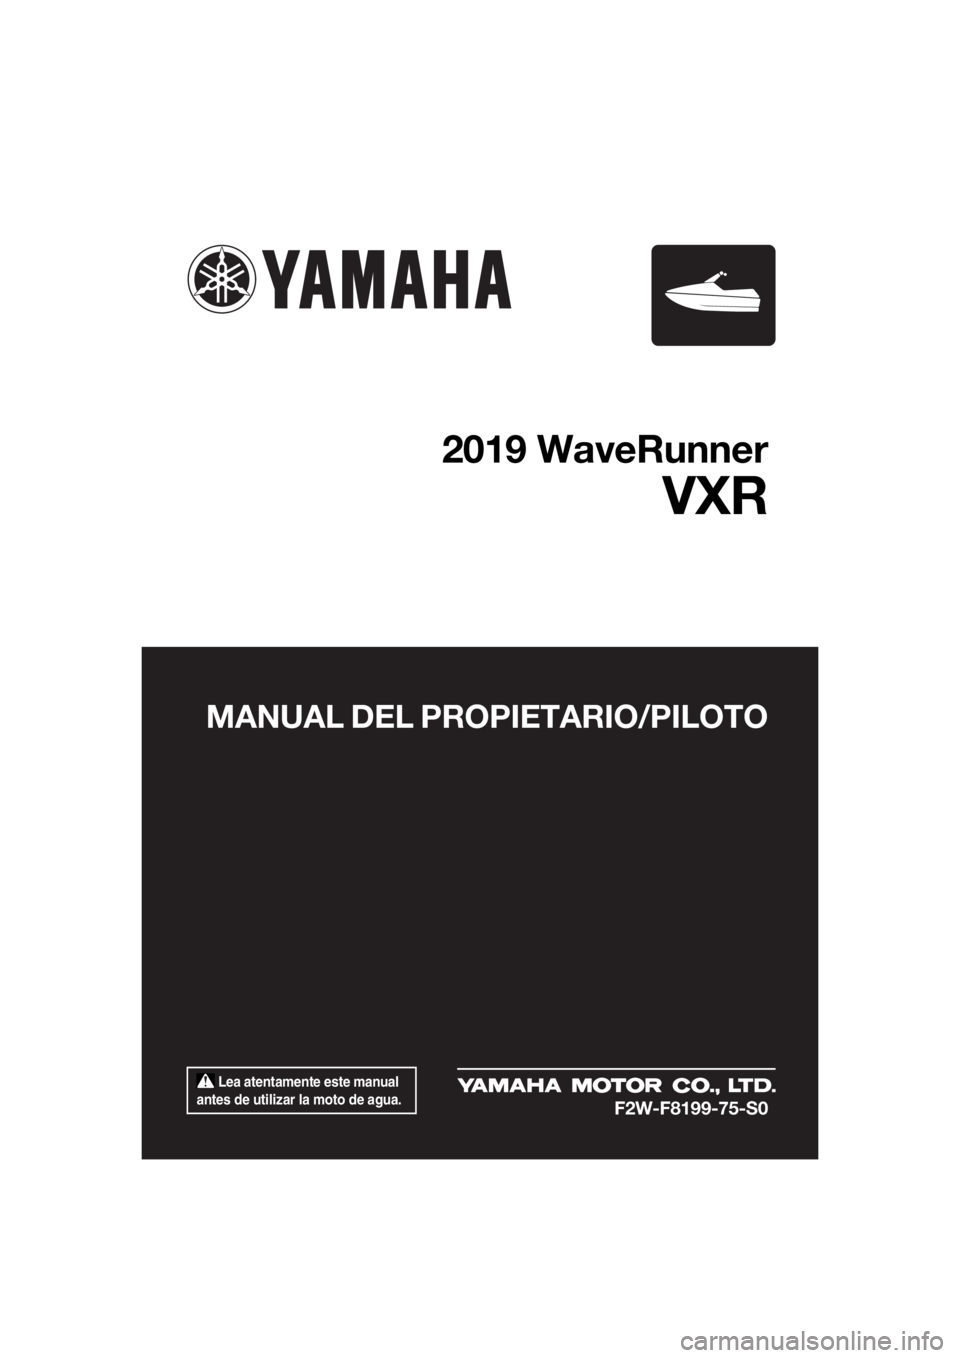 YAMAHA VXR 2019  Manuale de Empleo (in Spanish)  Lea atentamente este manual 
antes de utilizar la moto de agua.
MANUAL DEL PROPIETARIO/PILOTO
2019 WaveRunner
VXR
F2W-F8199-75-S0
UF2W75S0.book  Page 1  Tuesday, July 17, 2018  4:37 PM 